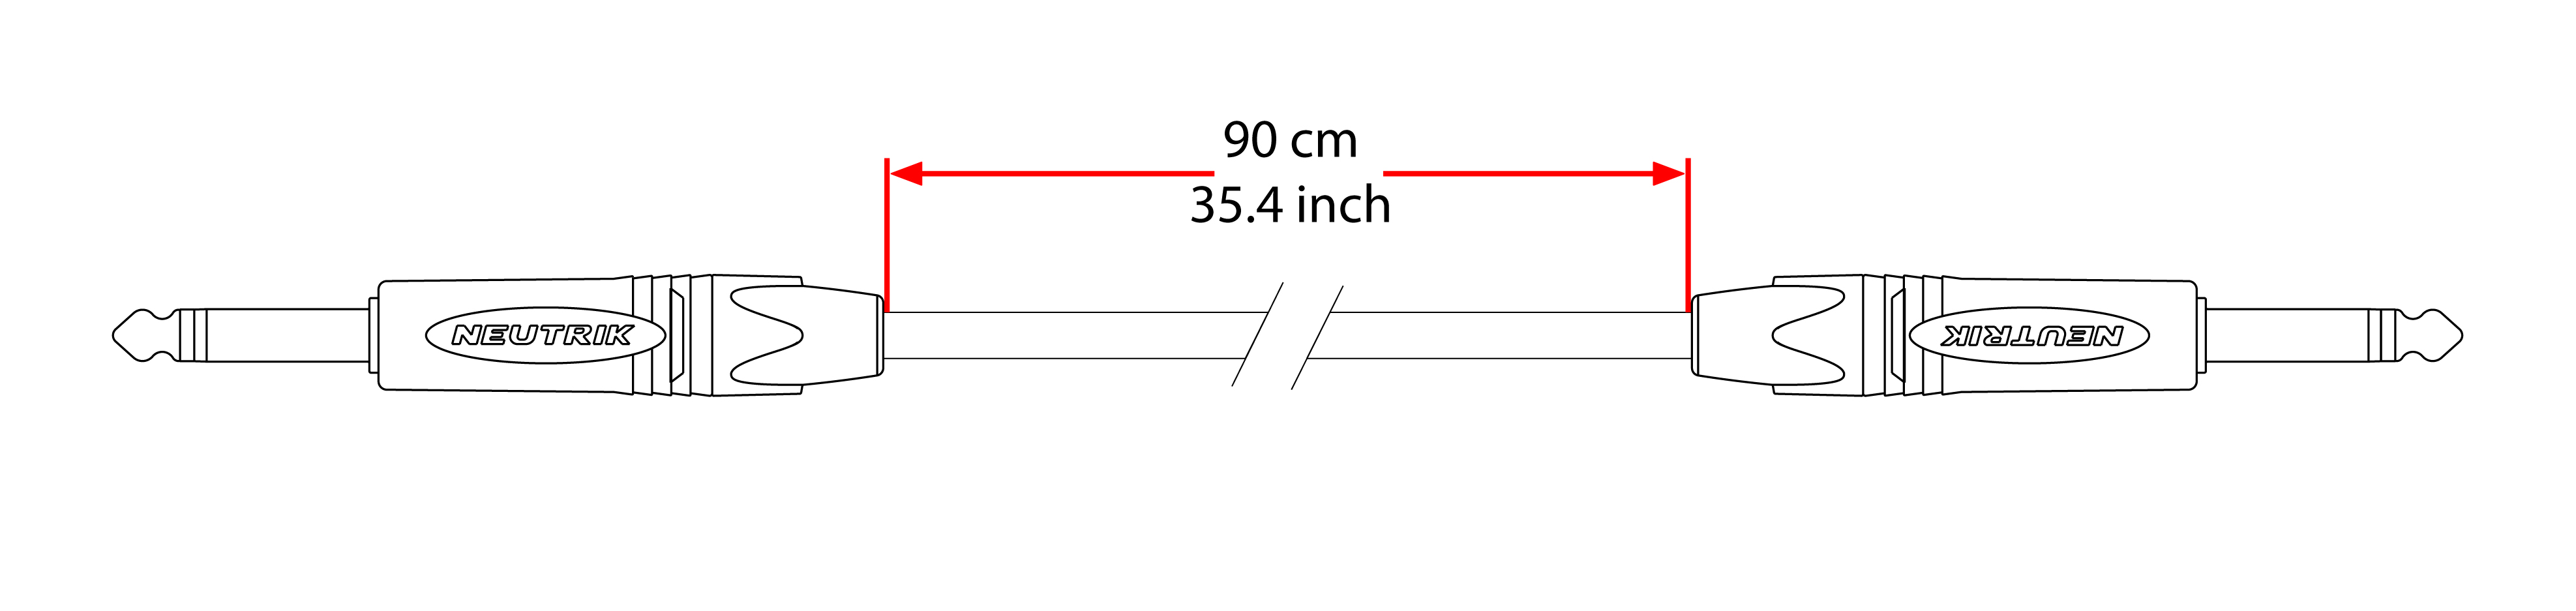 90cm patch cable